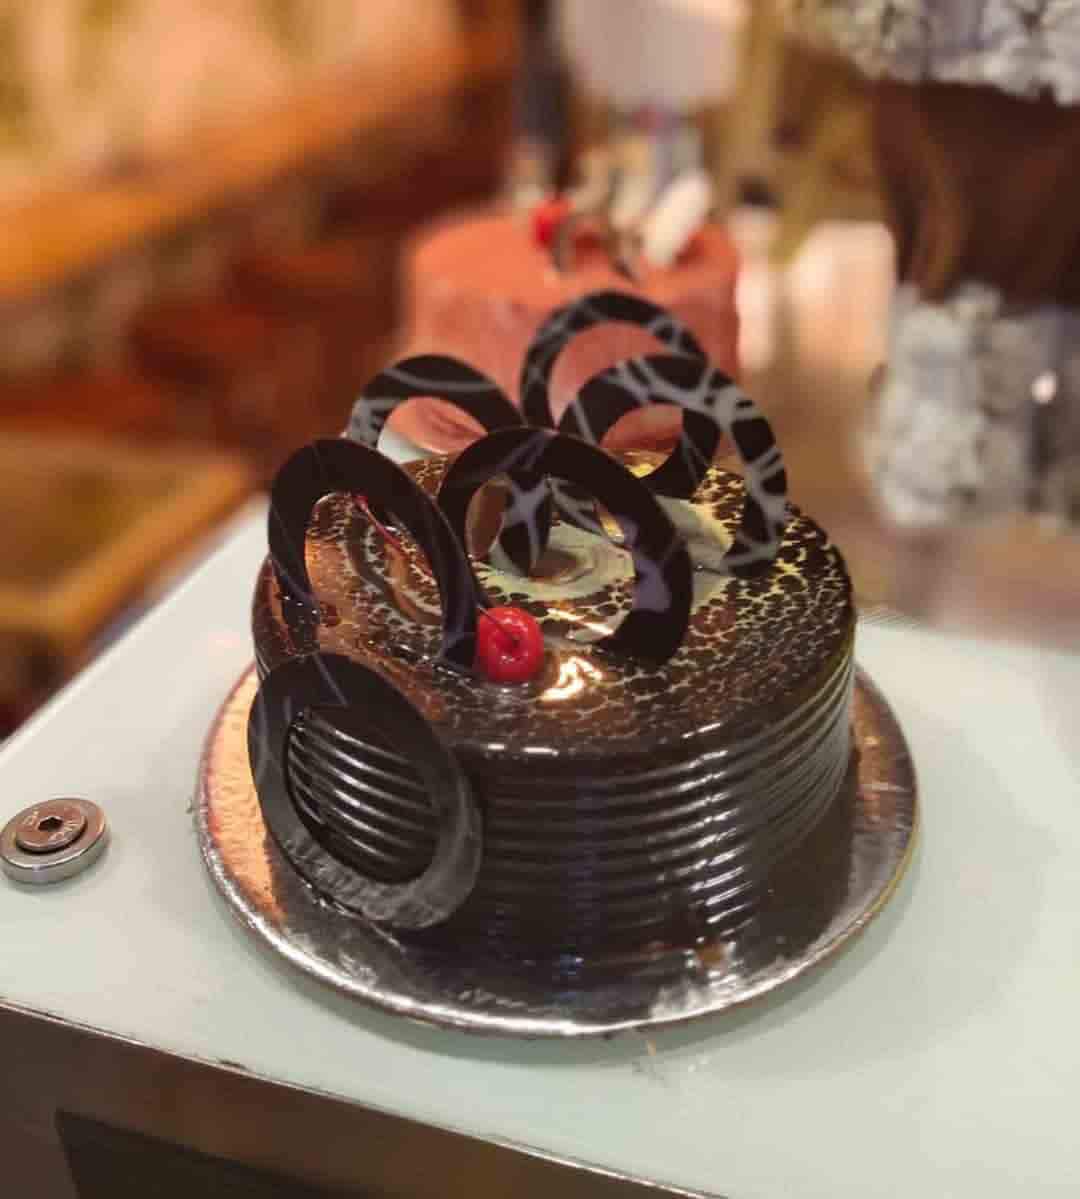 3 Best Cake Shops in Bikaner, RJ - ThreeBestRated